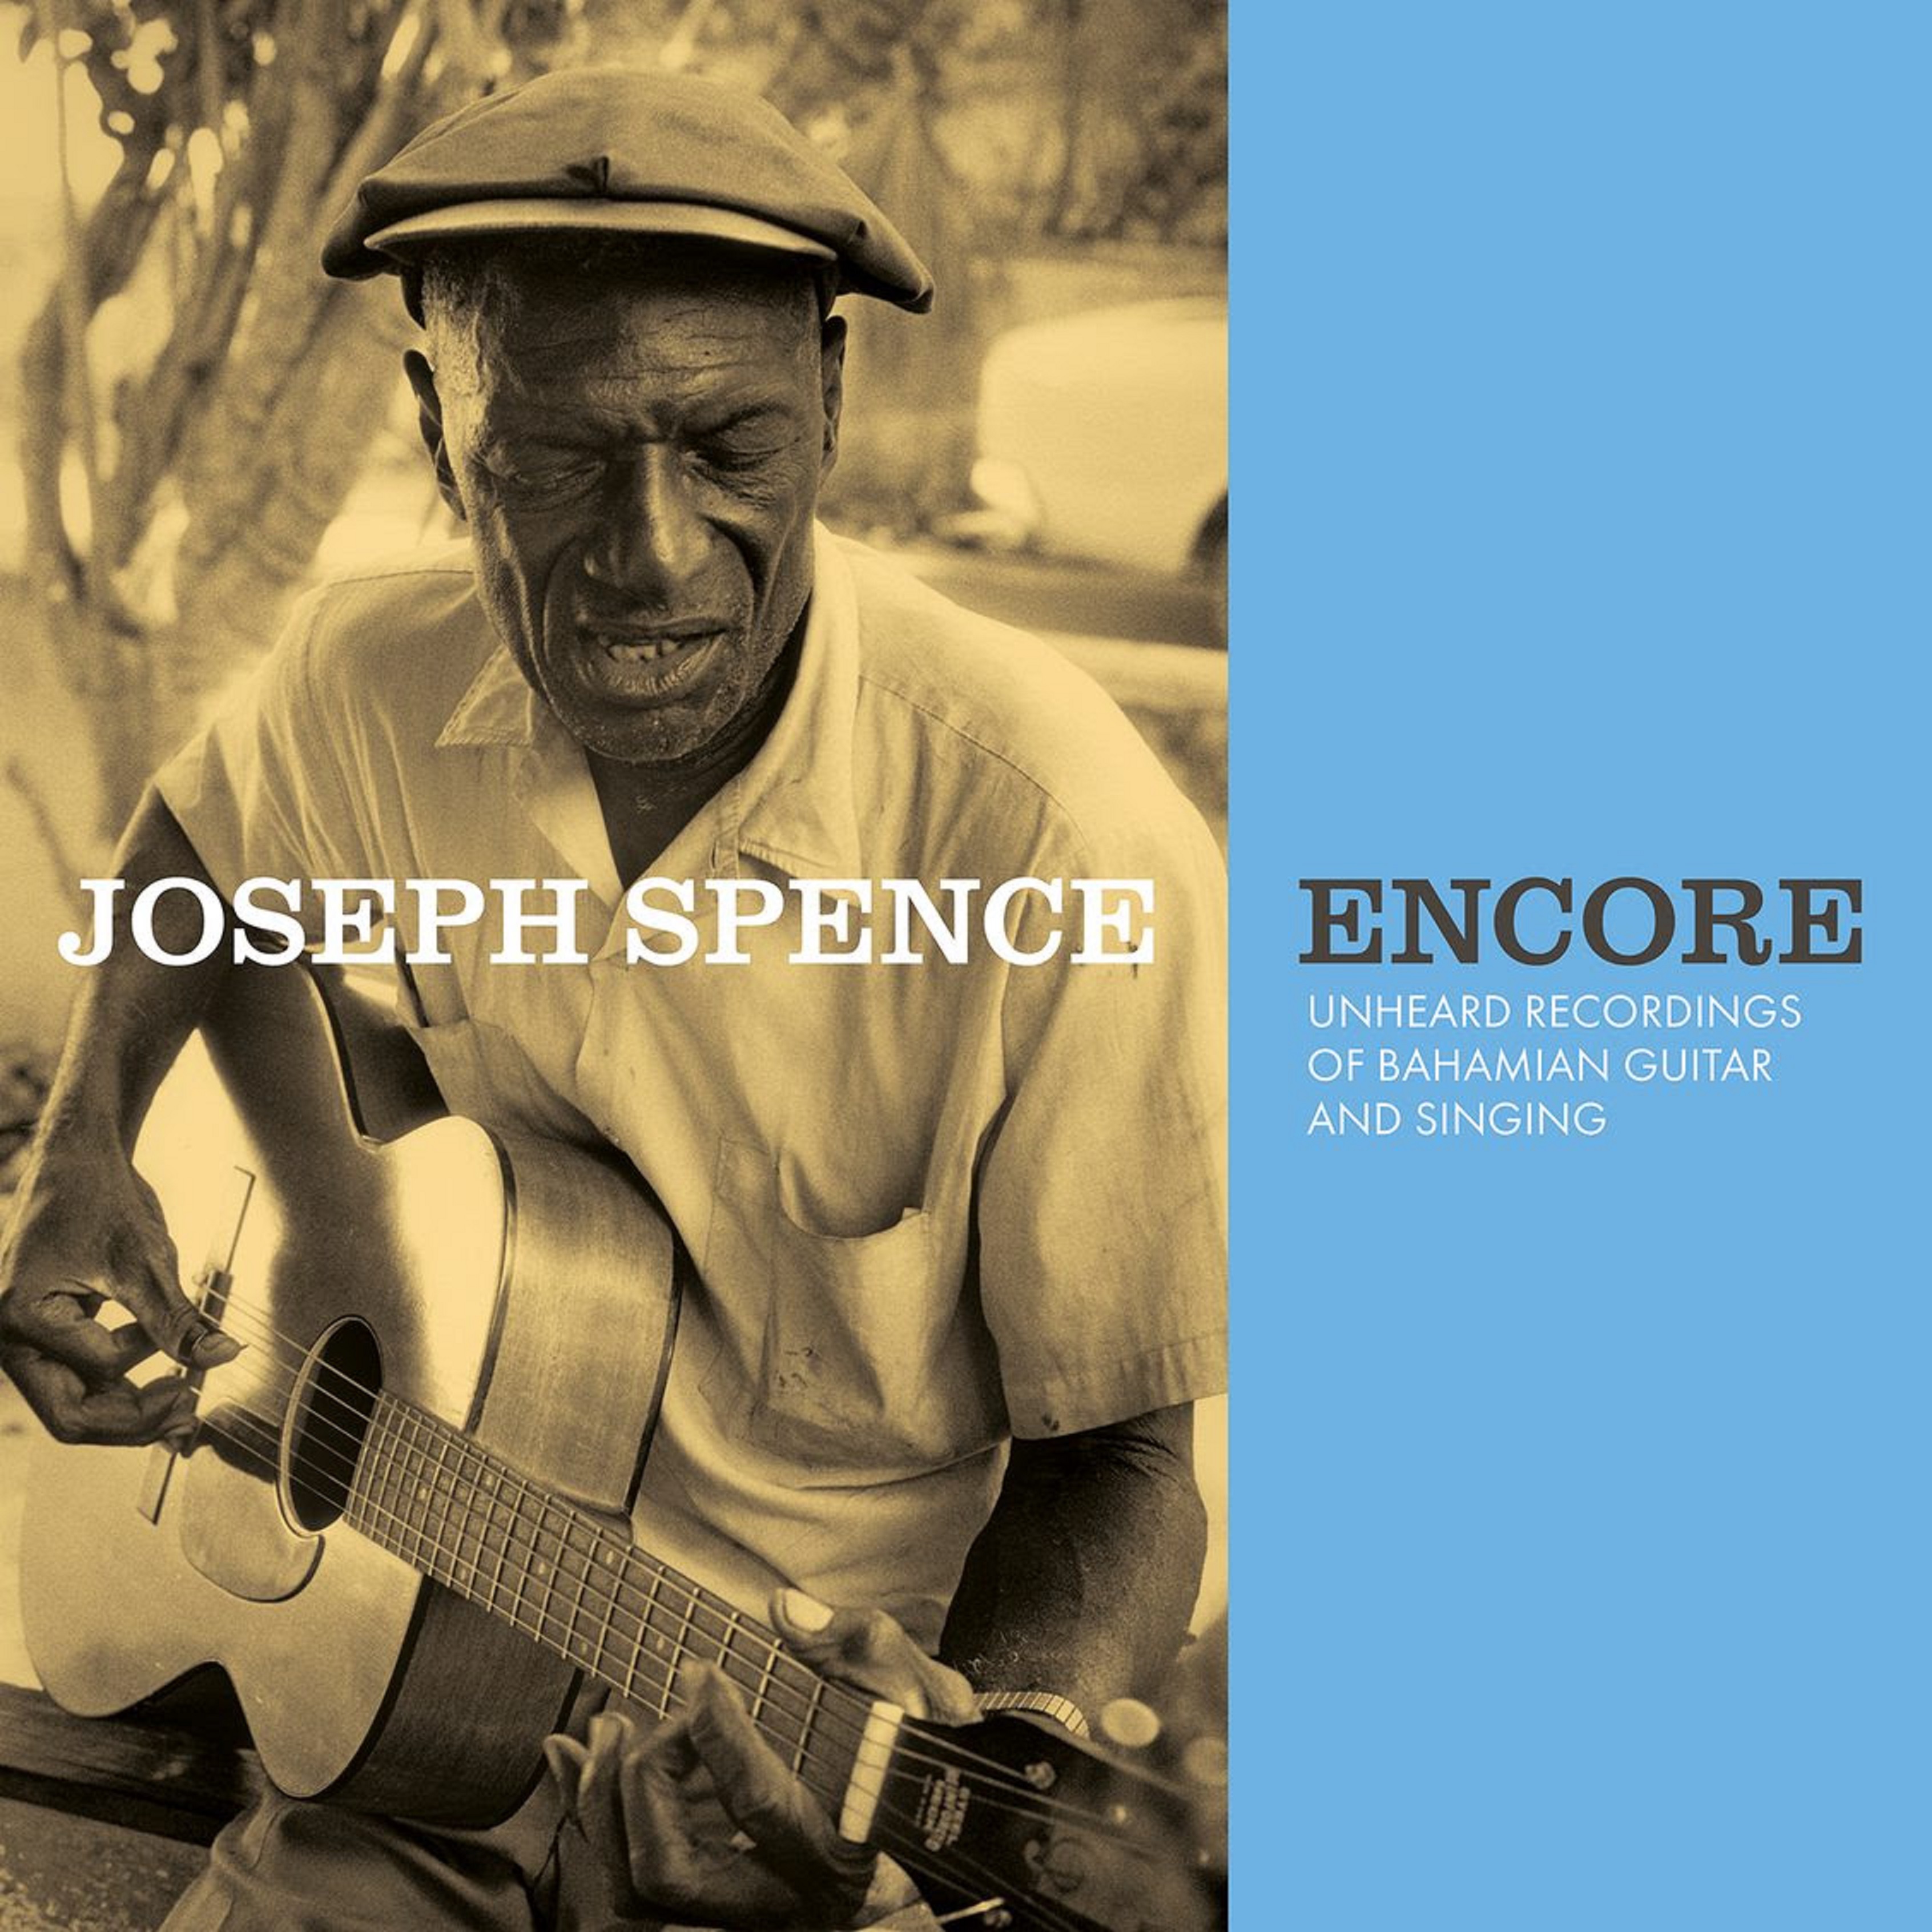 Smithsonian Folkways releases album of new music from Bahamian guitar legend Joseph Spence